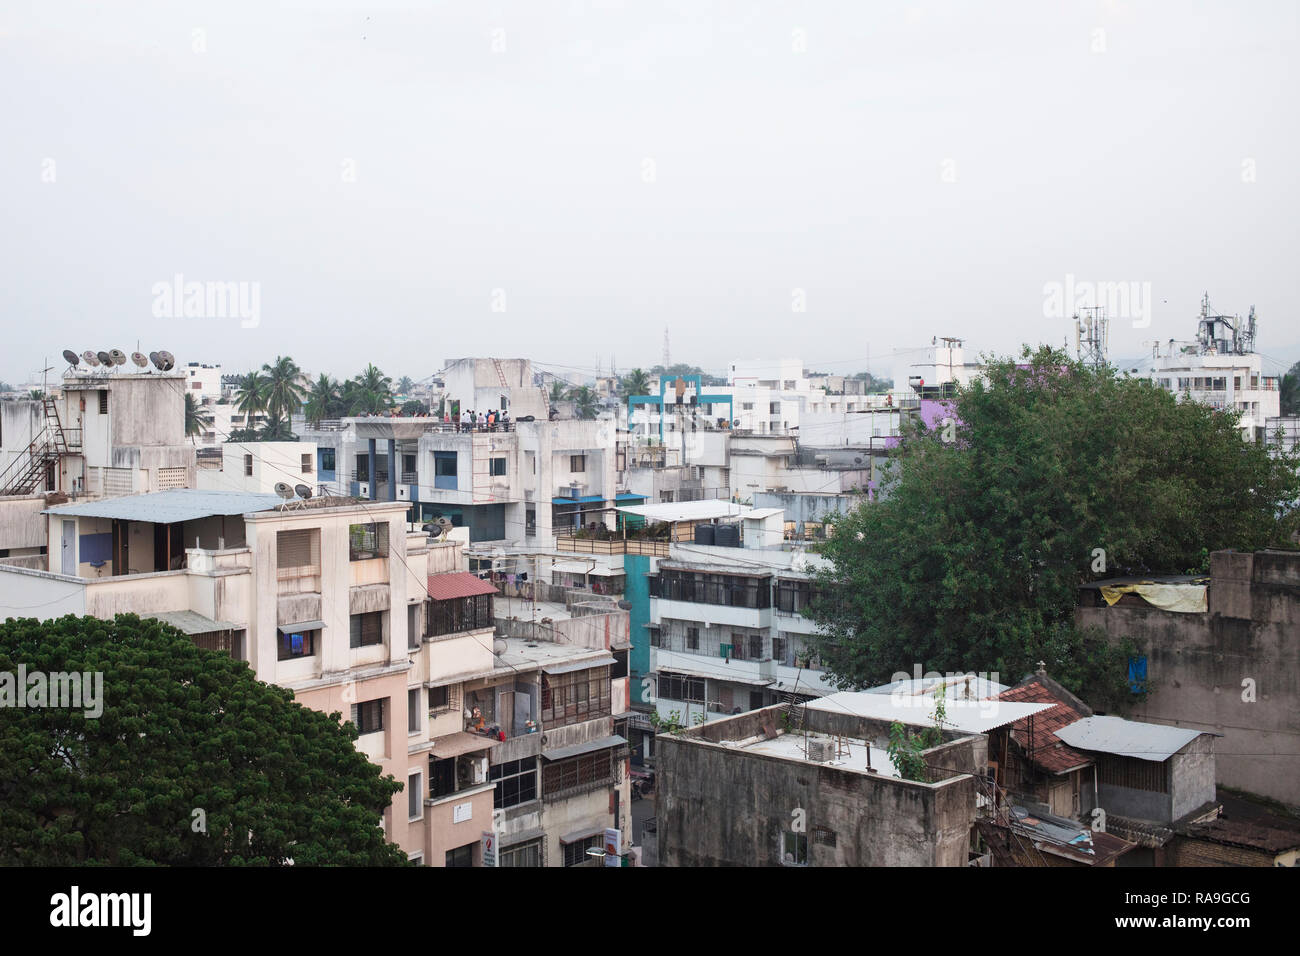 Pune, Maharashtra / India - October 2015: View over the city of Pune, India. Stock Photo